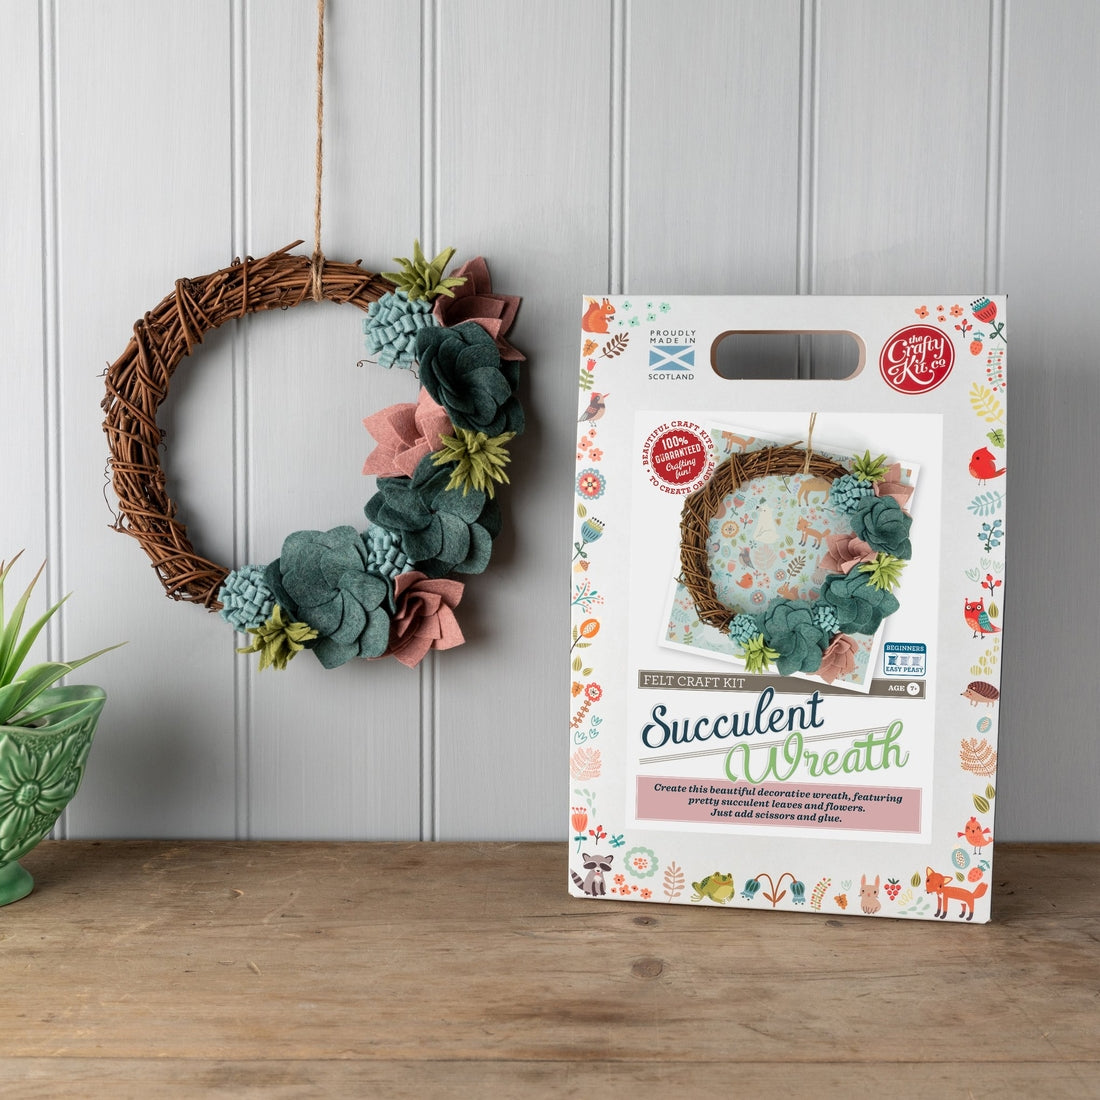 Succulent Felt Wreath Craft Kit - The Crafty Kit Company